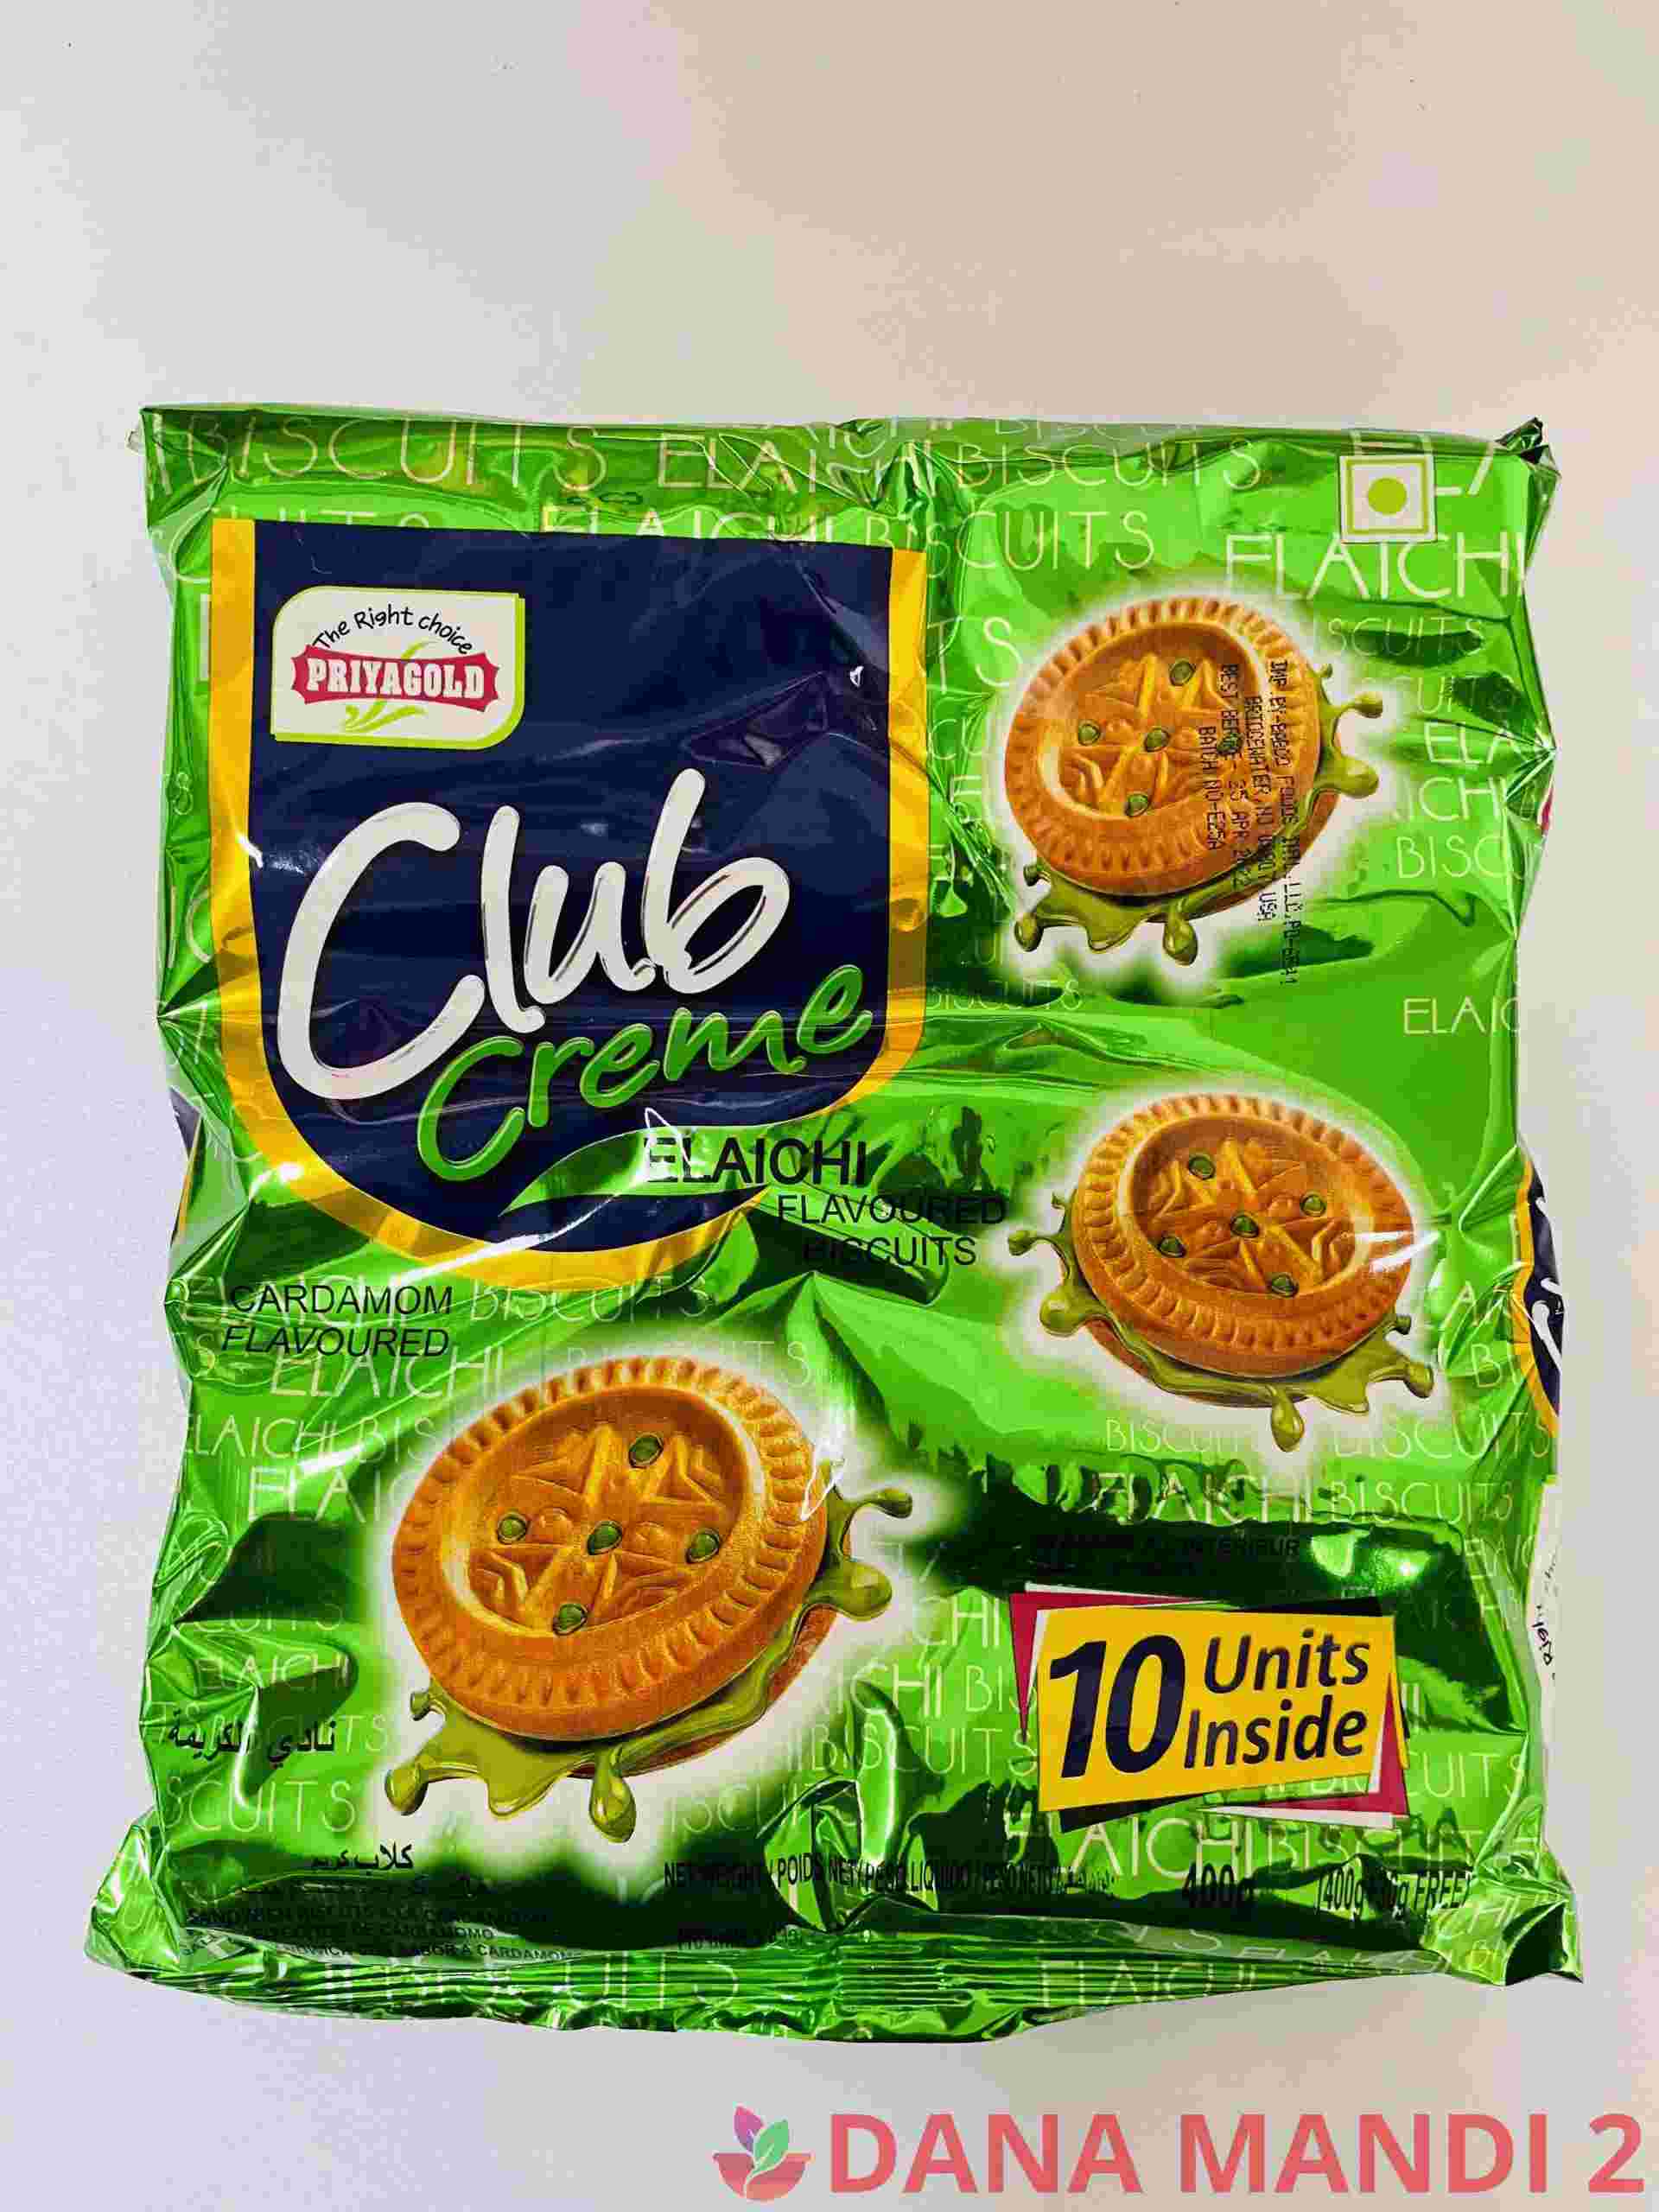 Priyagold Club Crème Elaichi